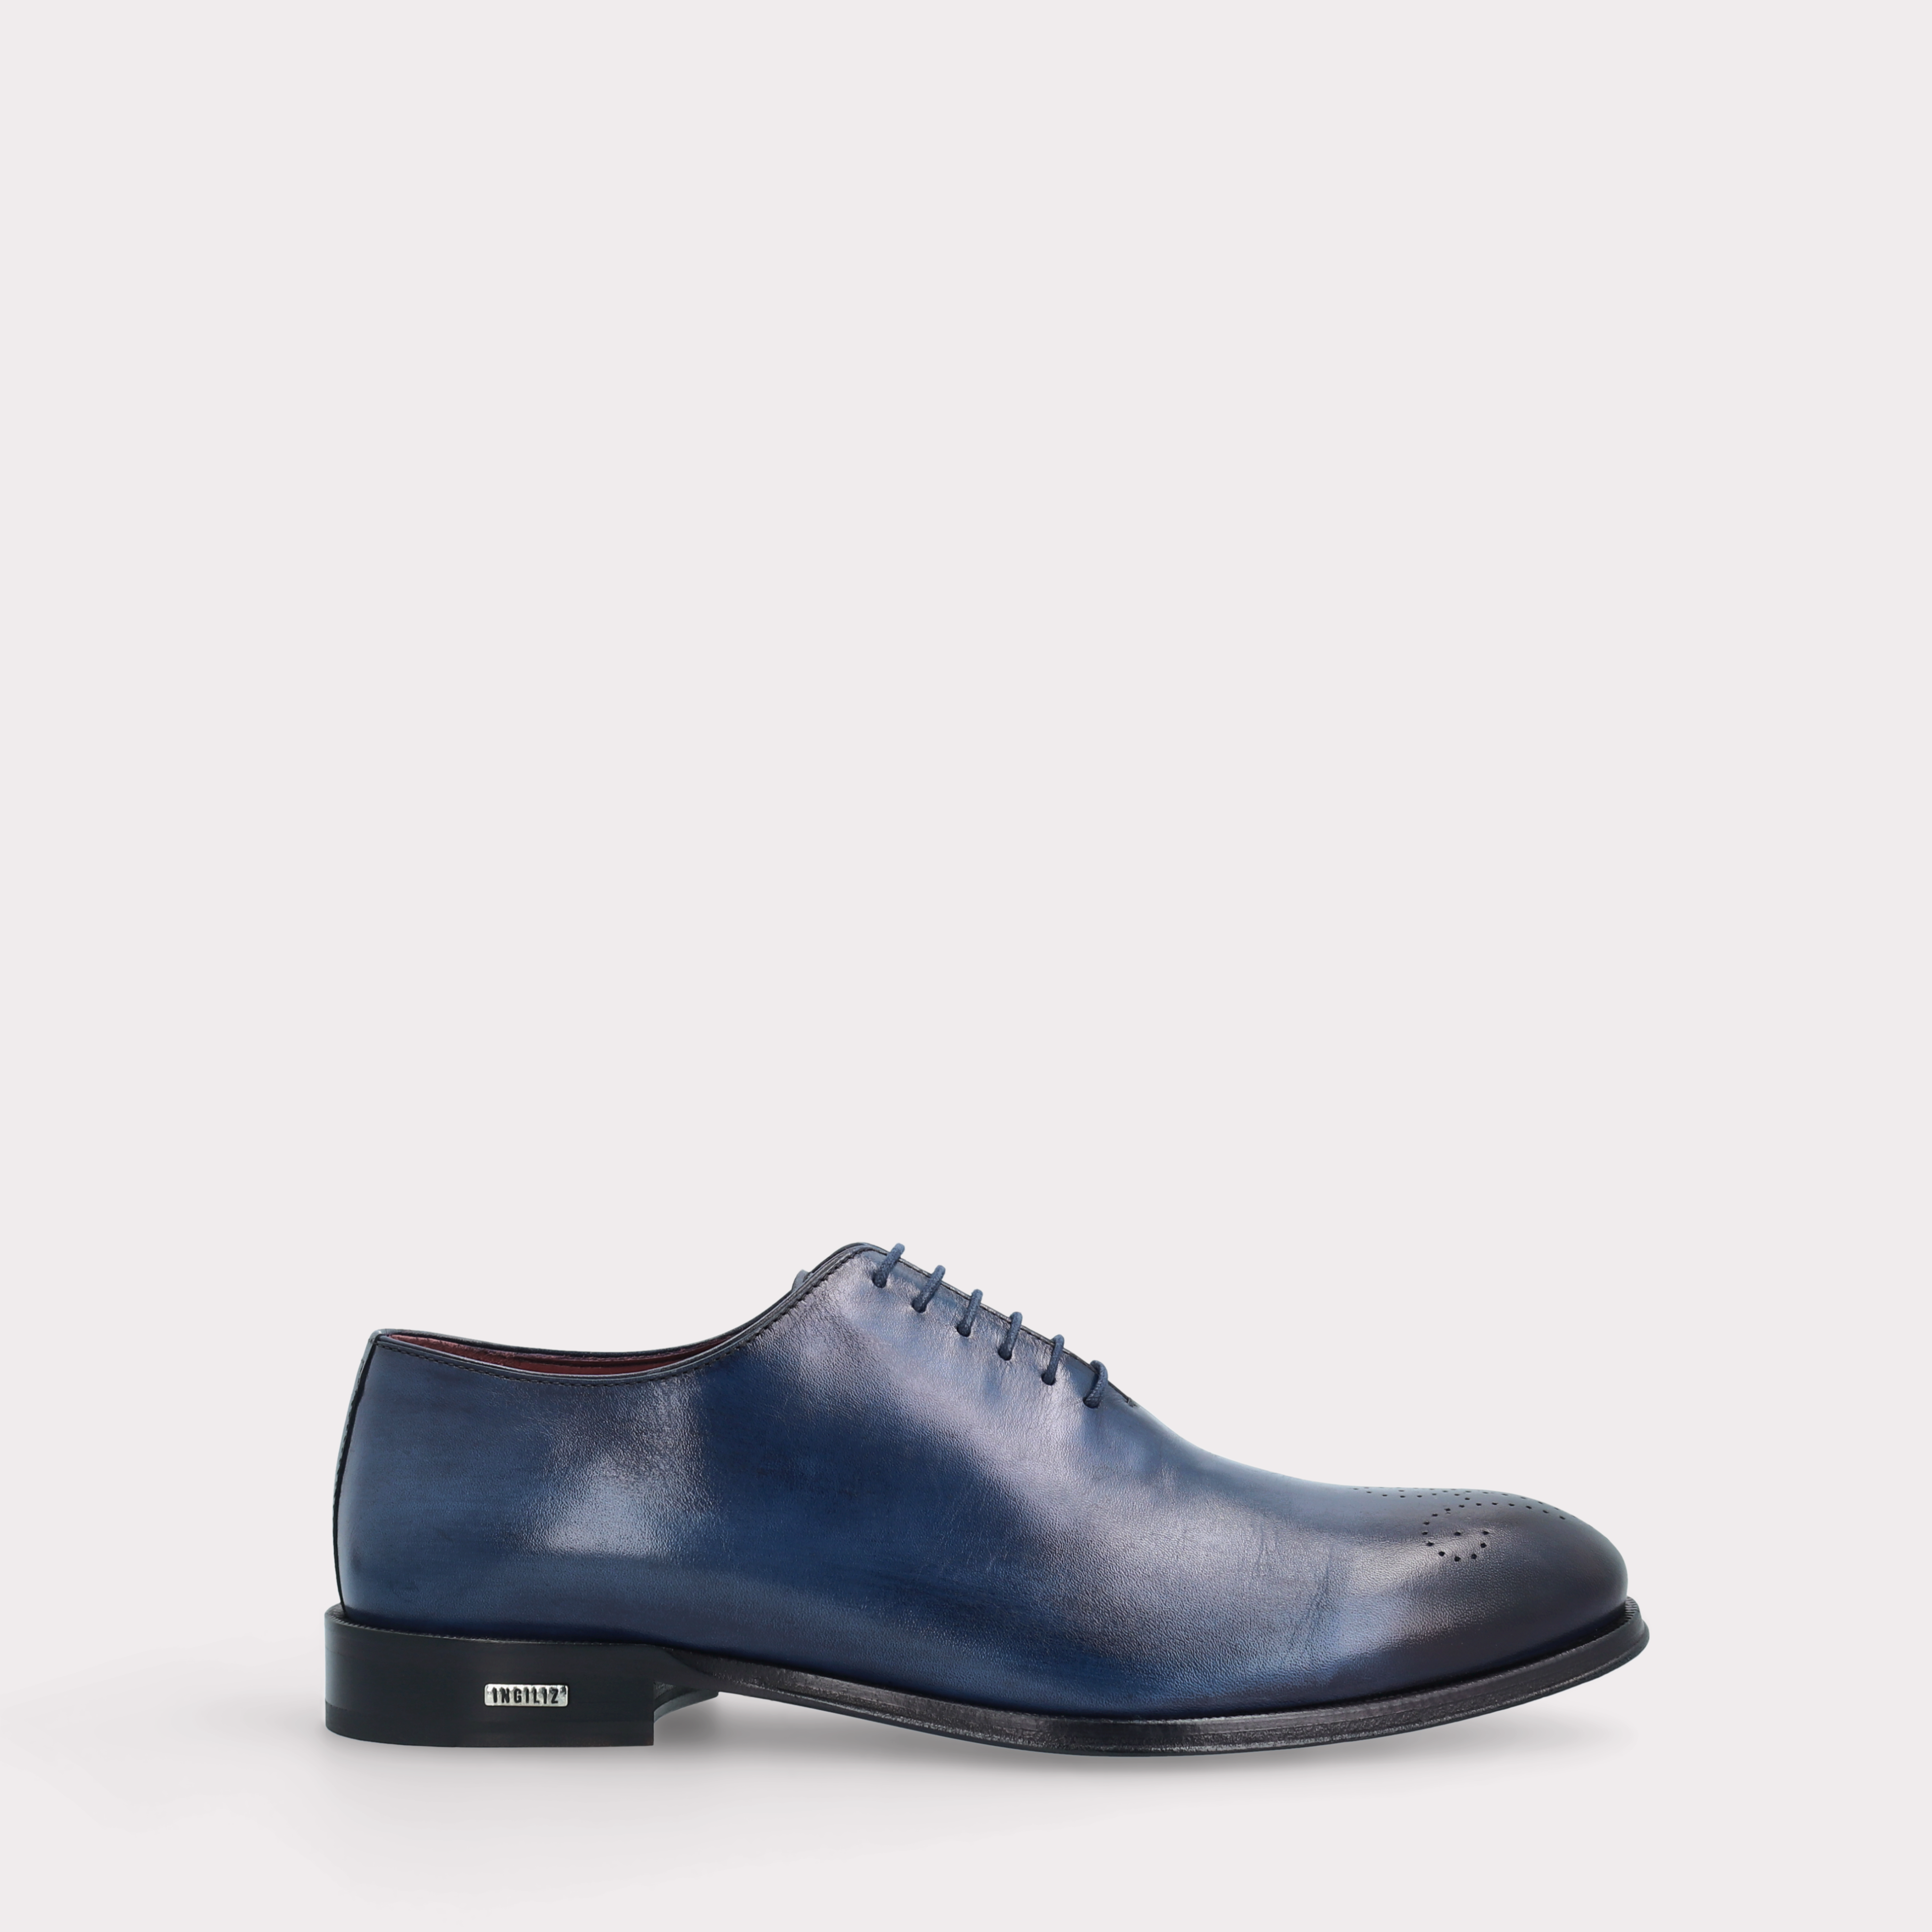 PRATO 01 dark blue leather oxford shoes